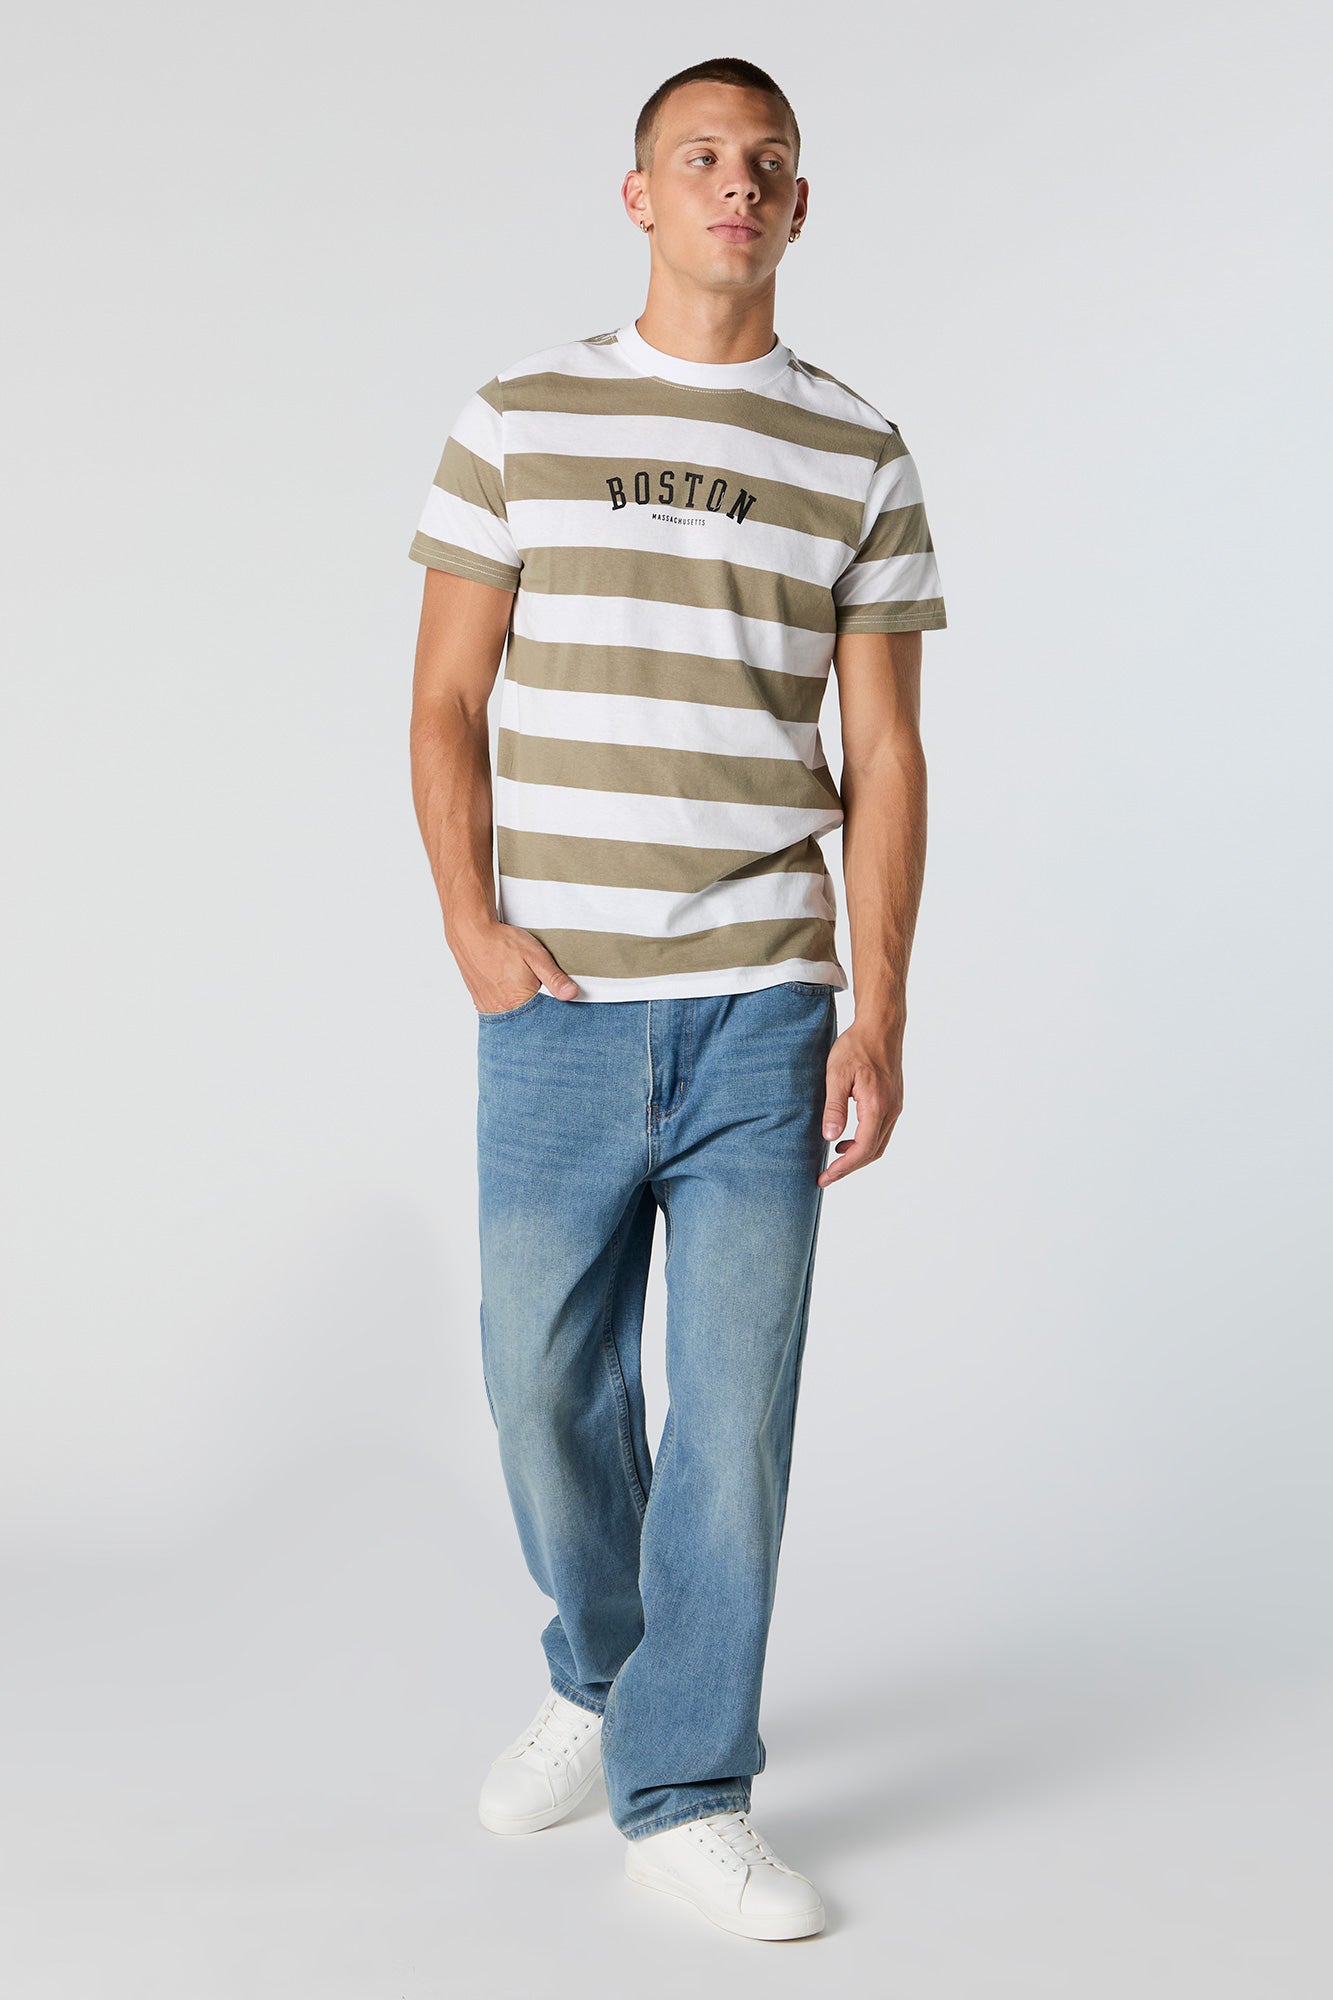 Boston Graphic Striped -Shirt